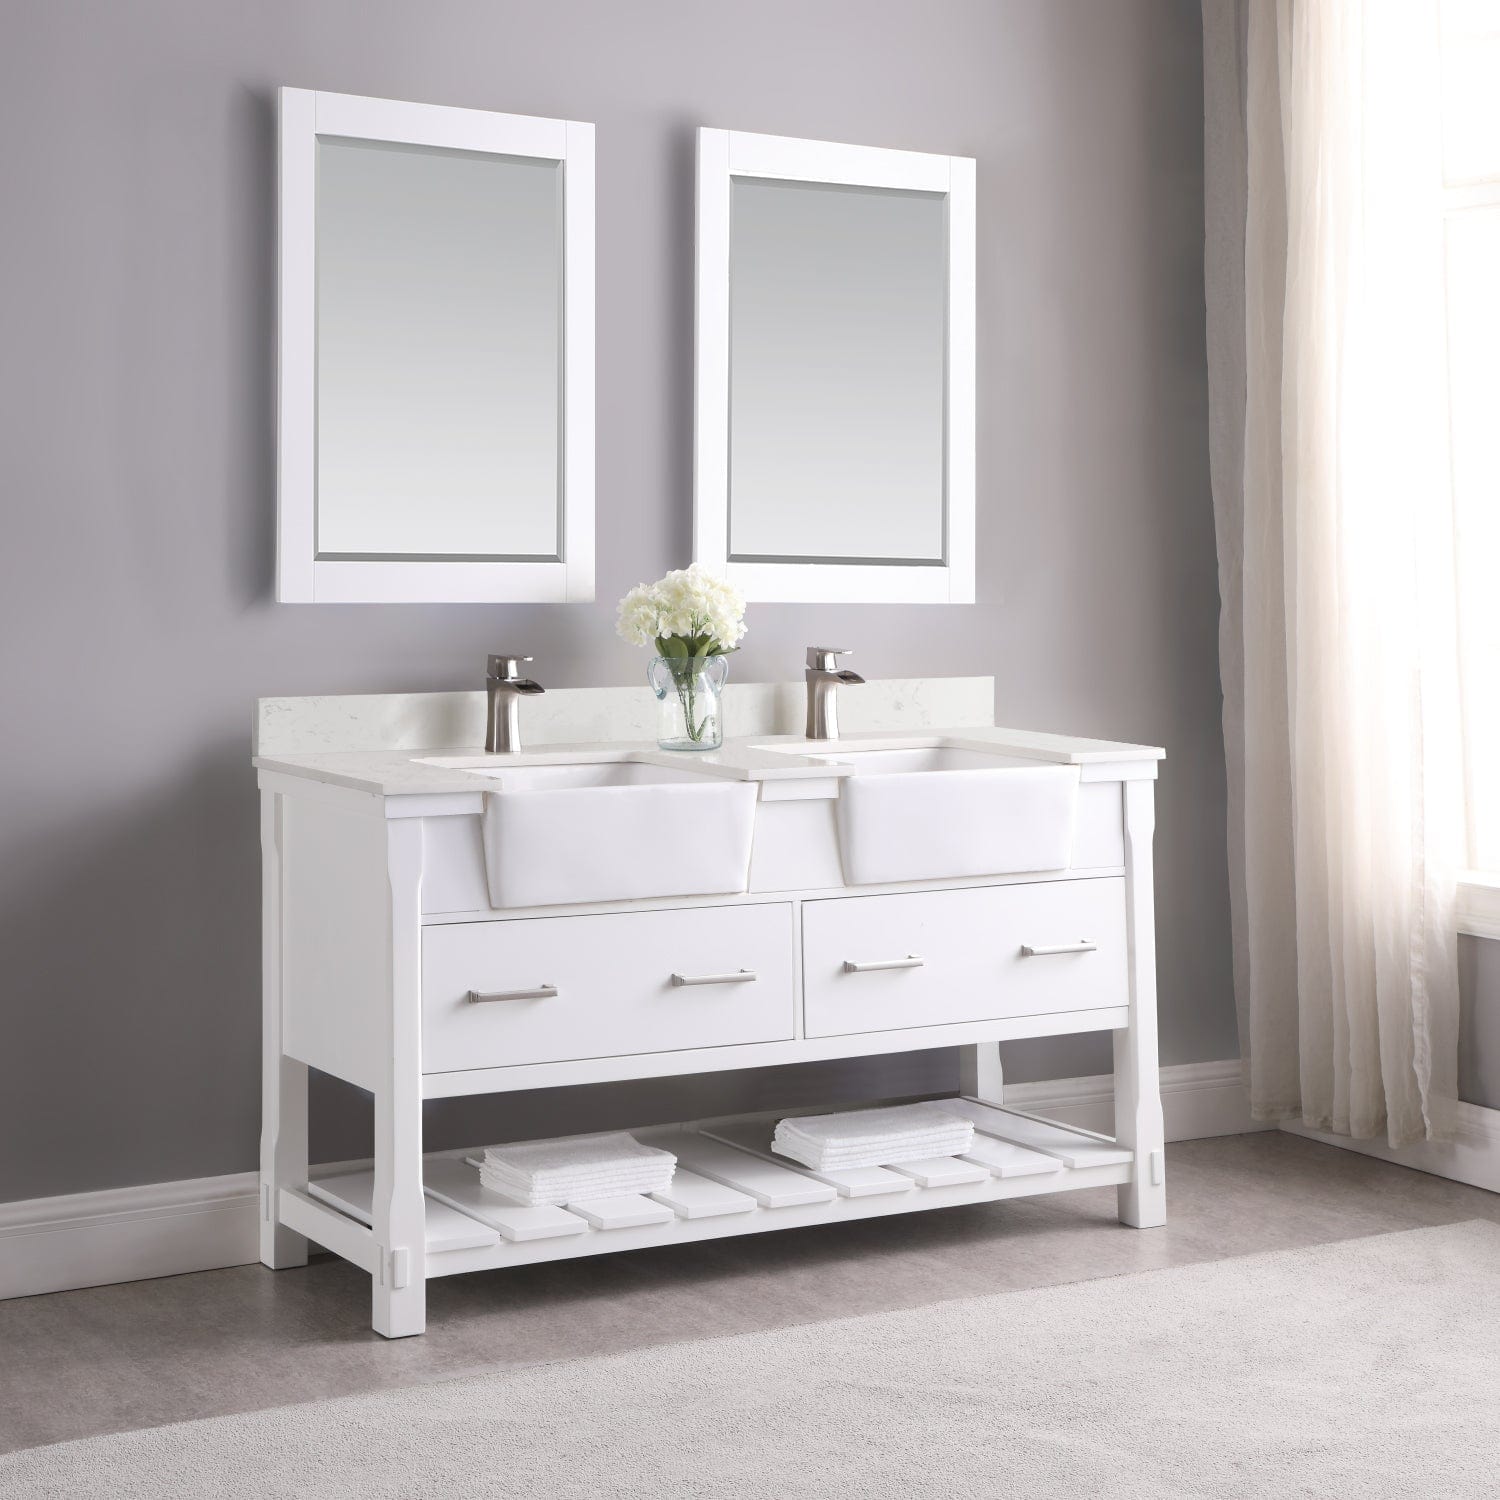 Altair Georgia 60" Double Bathroom Vanity Set in White and Composite Carrara White Stone Top with White Farmhouse Basin with Mirror 537060-WH-AW - Molaix631112970655Vanity537060-WH-AW